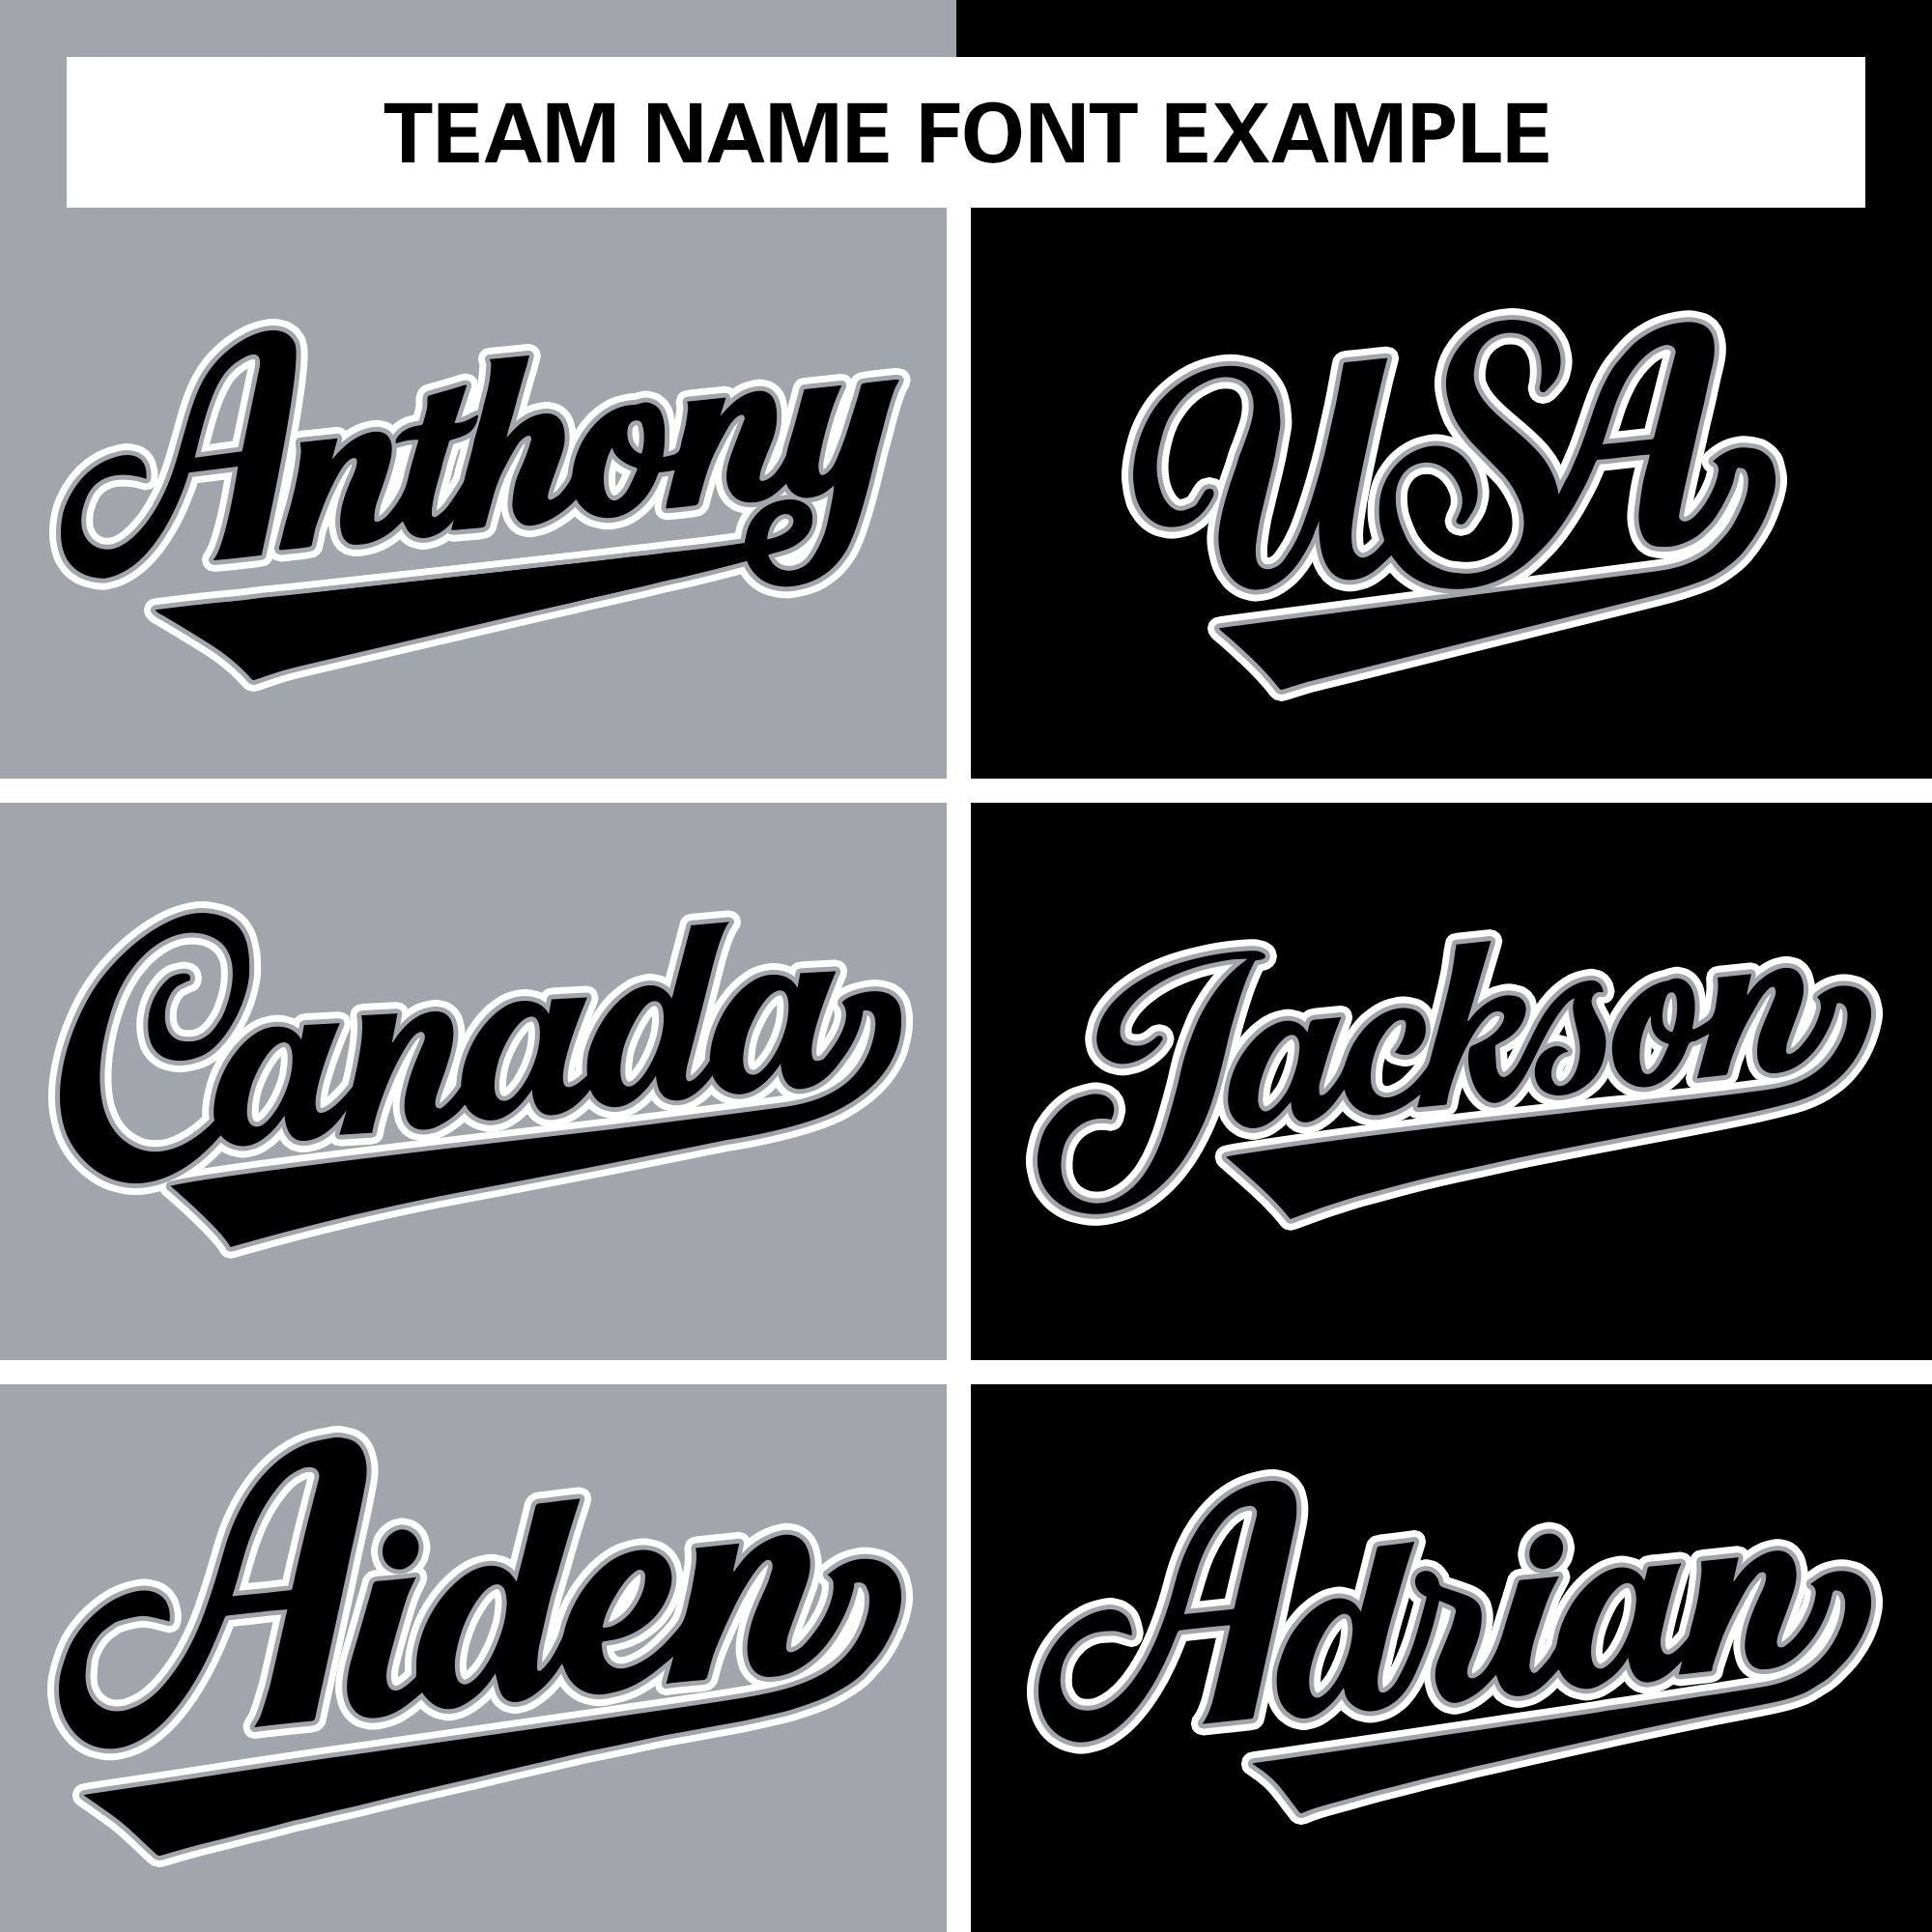 men custom letterman jacket team name font example